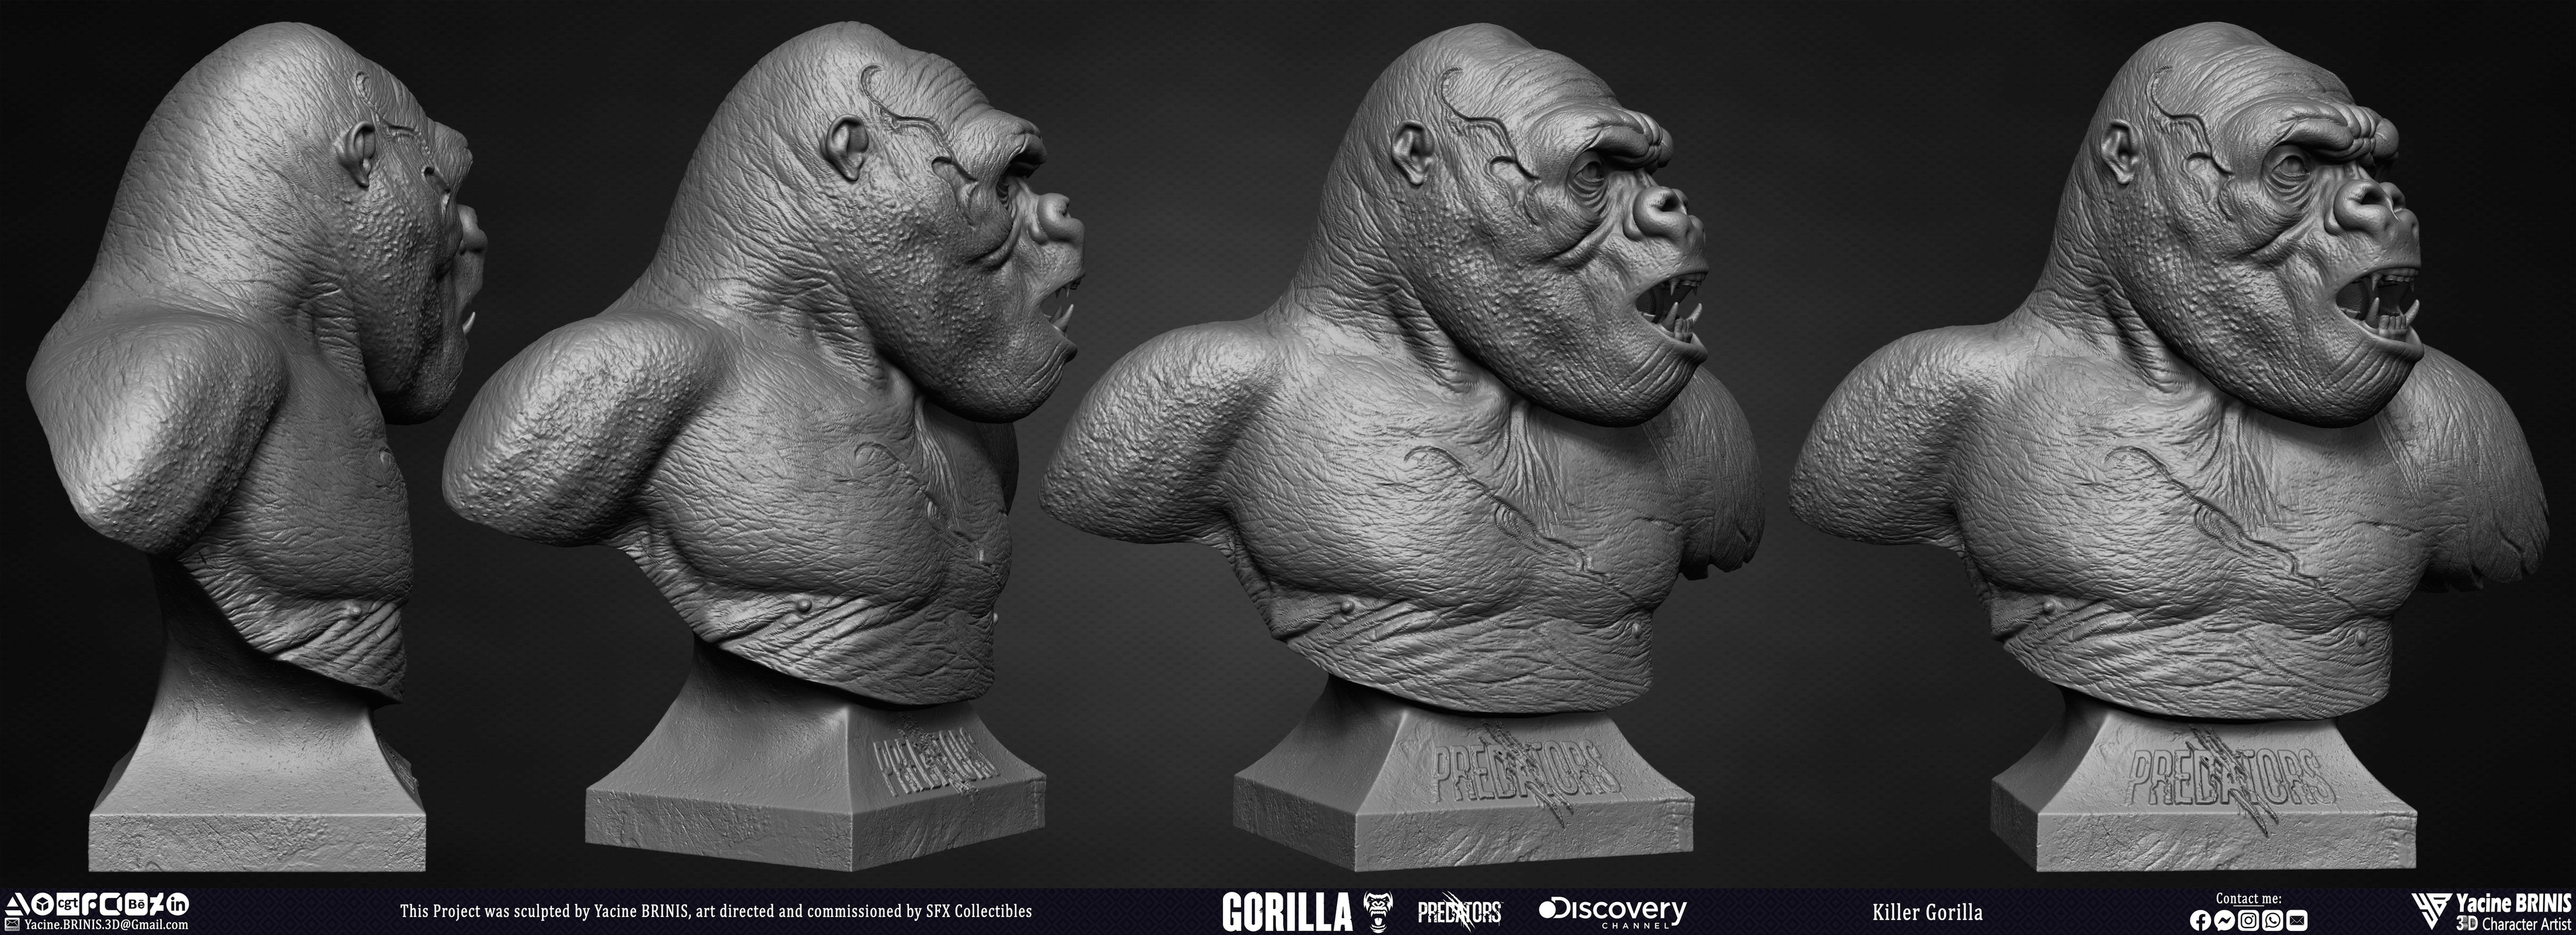 Killer Gorilla Predator sculpted by Yacine BRINIS 004